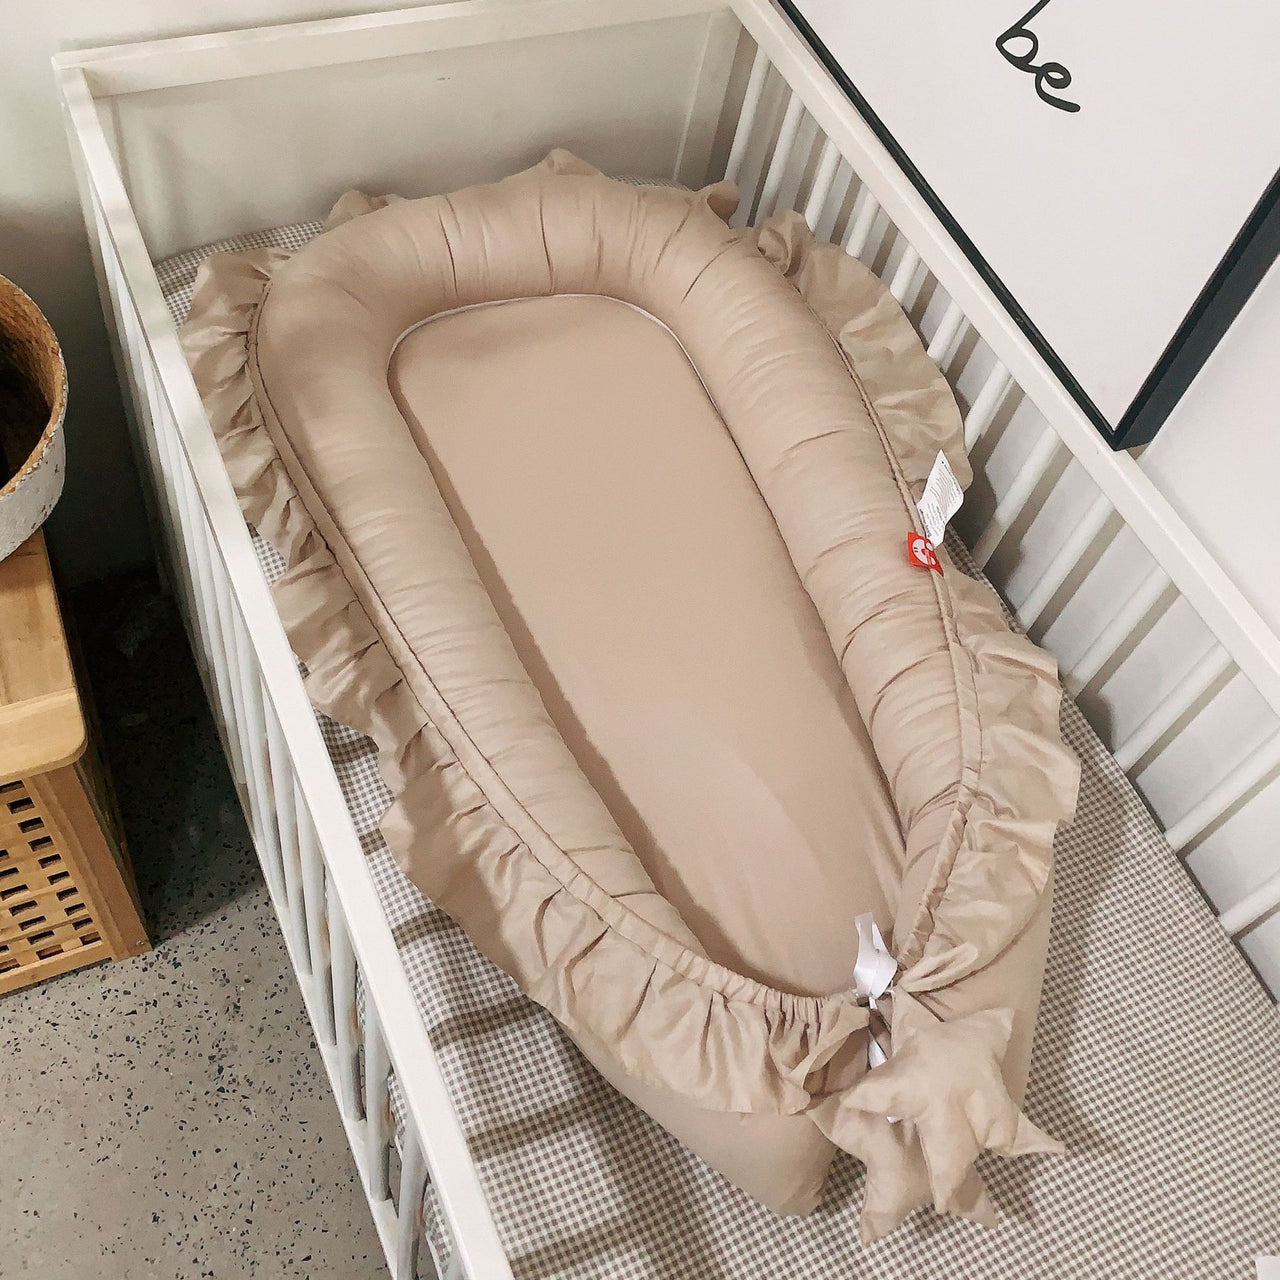 Portable Baby Crib Pillow Cotton Mattress